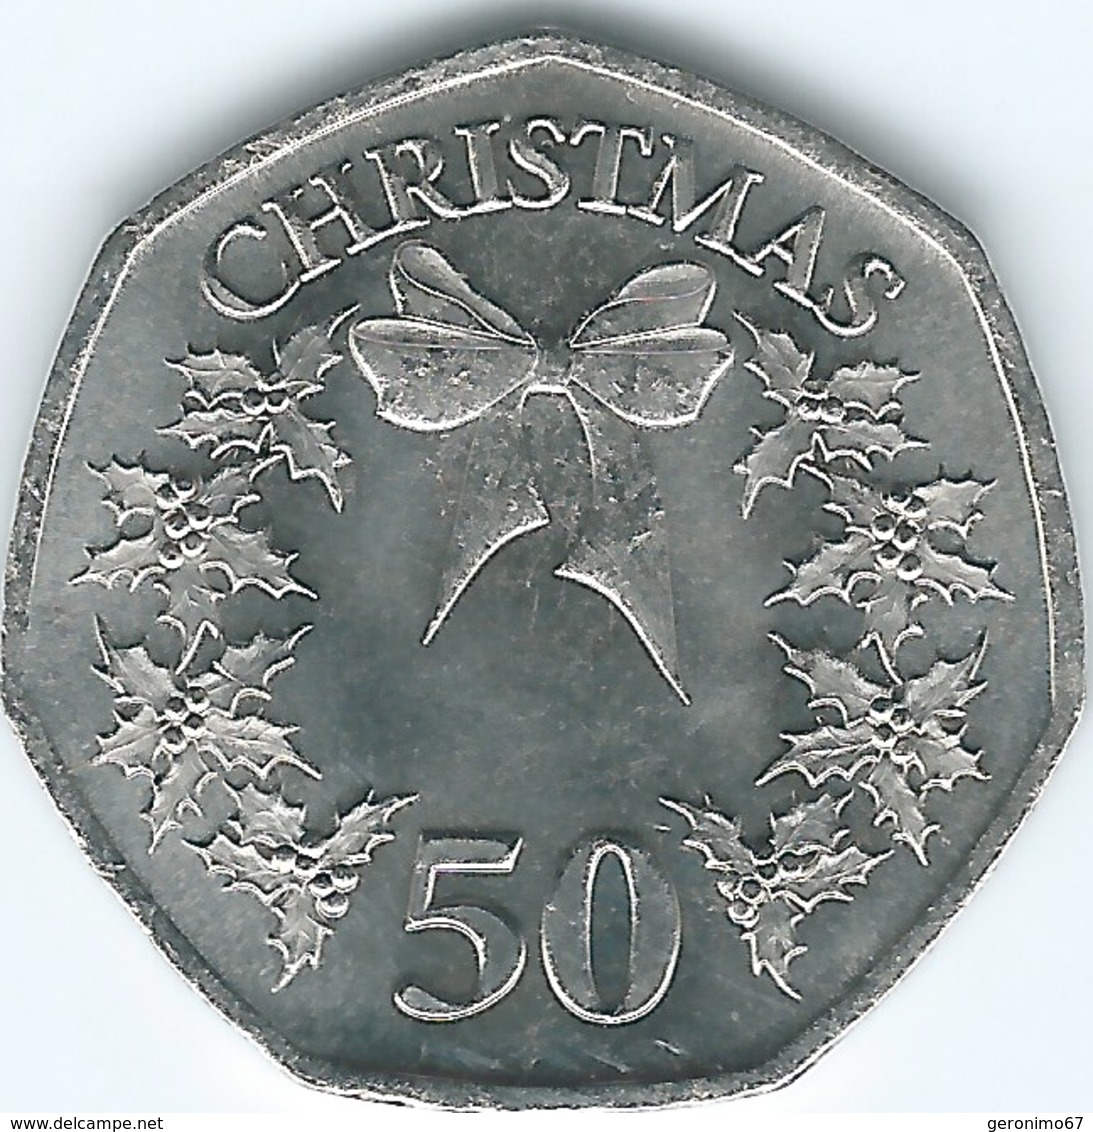 Gibraltar - Elizabeth II - 50 Pence - 2014 - Christmas - Gibraltar